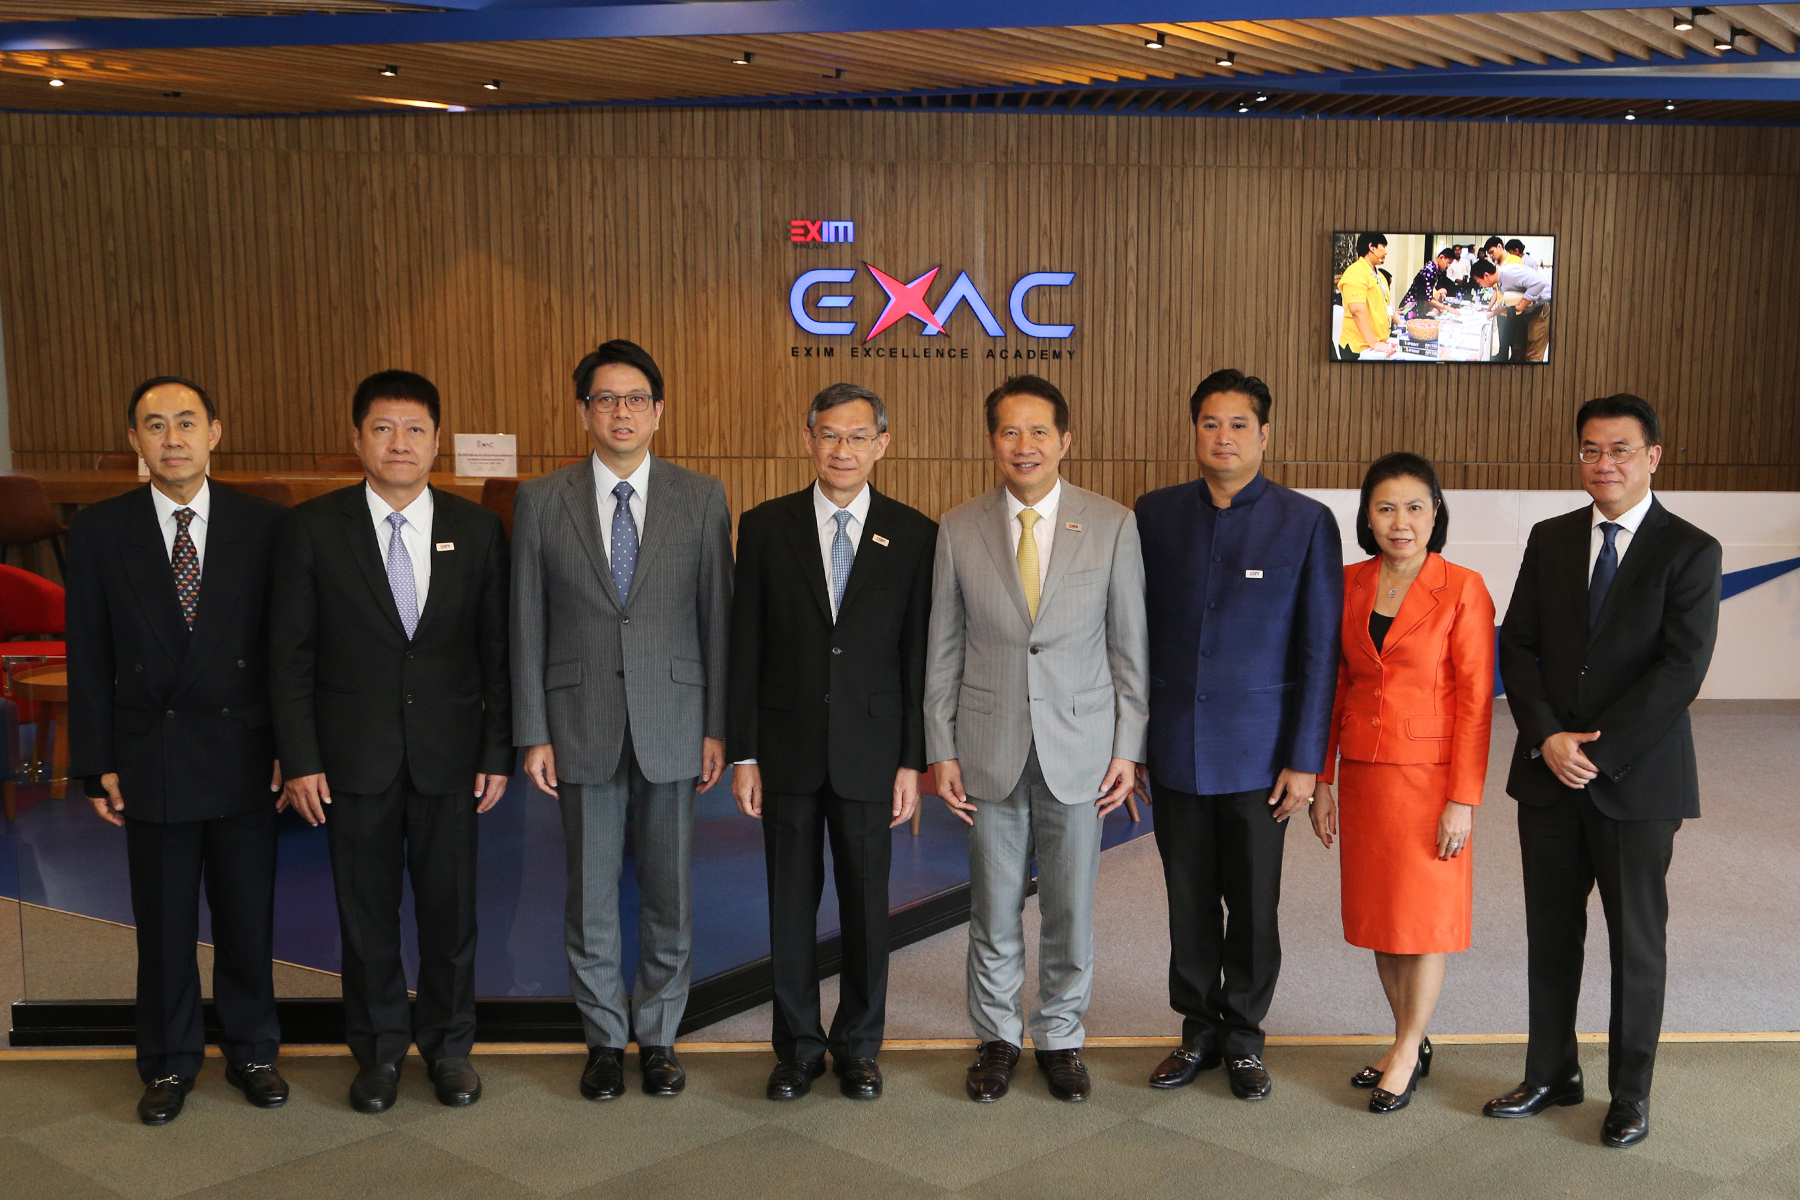 EXIM Thailand’s New Chairman and Directors Visit EXIM Thailand’s Facilities